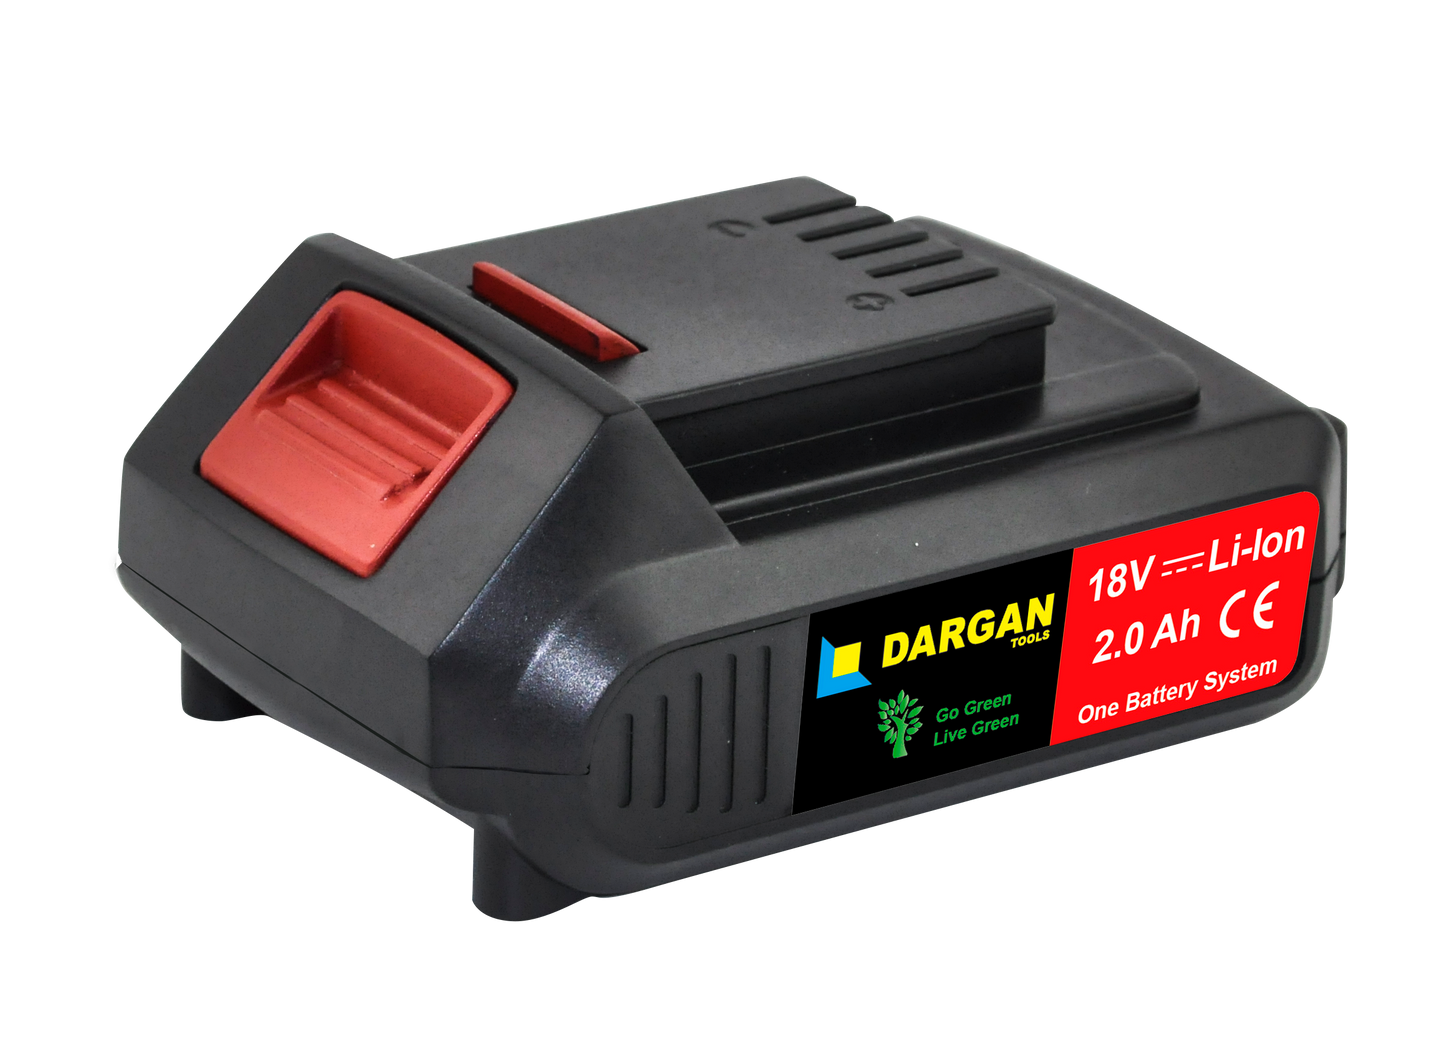 Dargan Li-on Battery 4.0A 18v